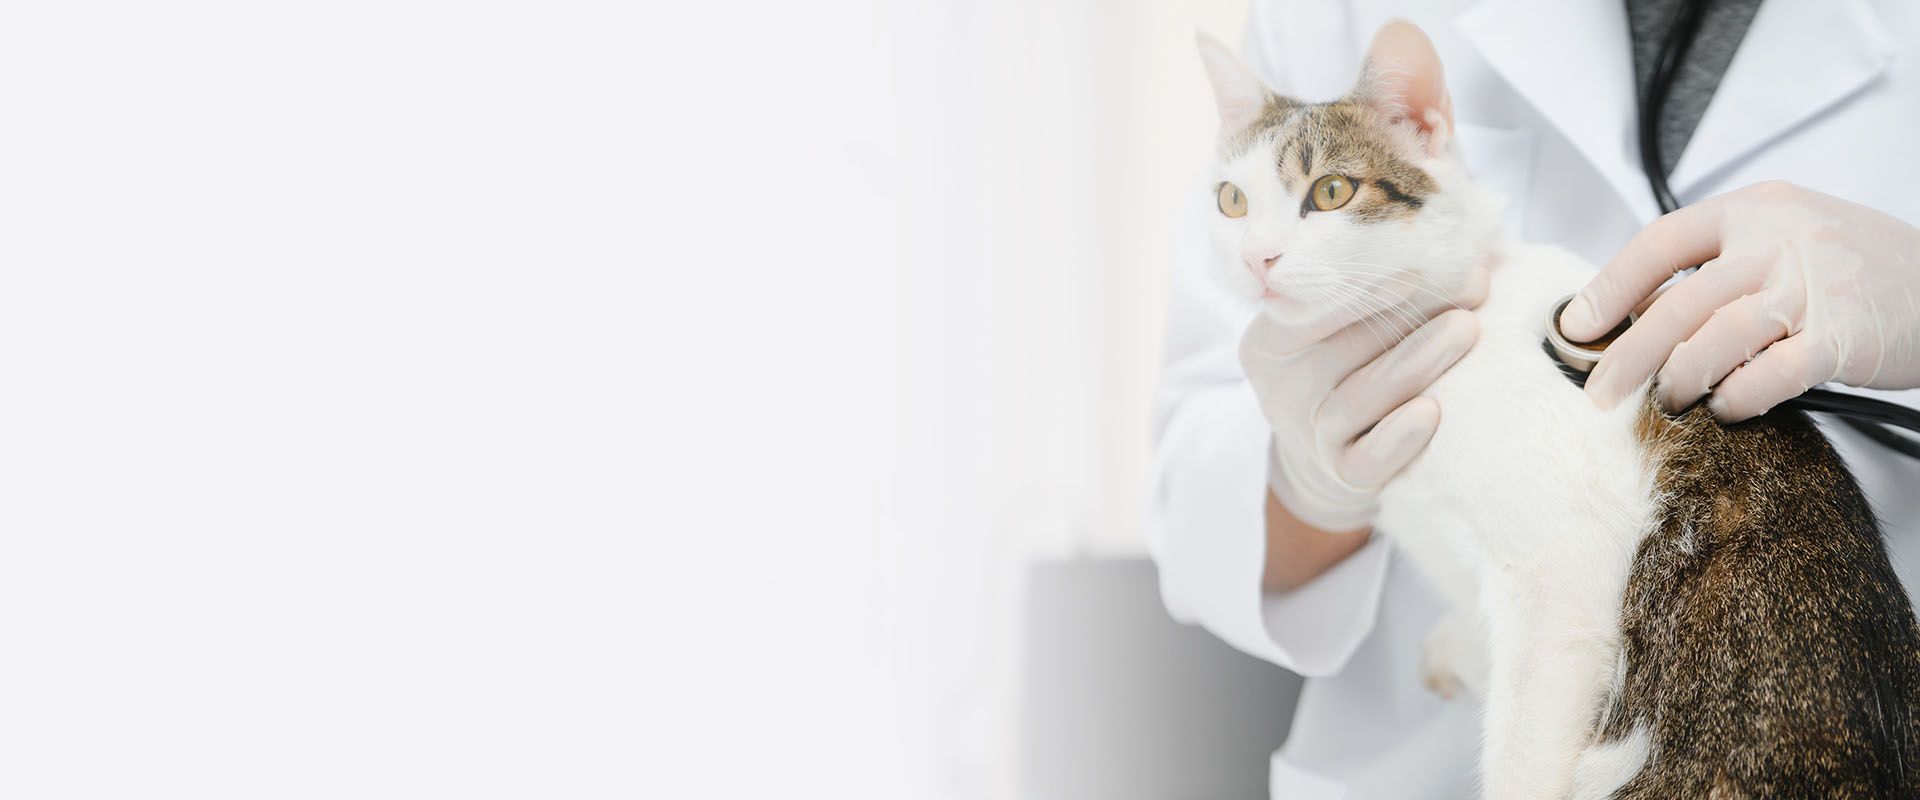 veterinarian doctor checking cat